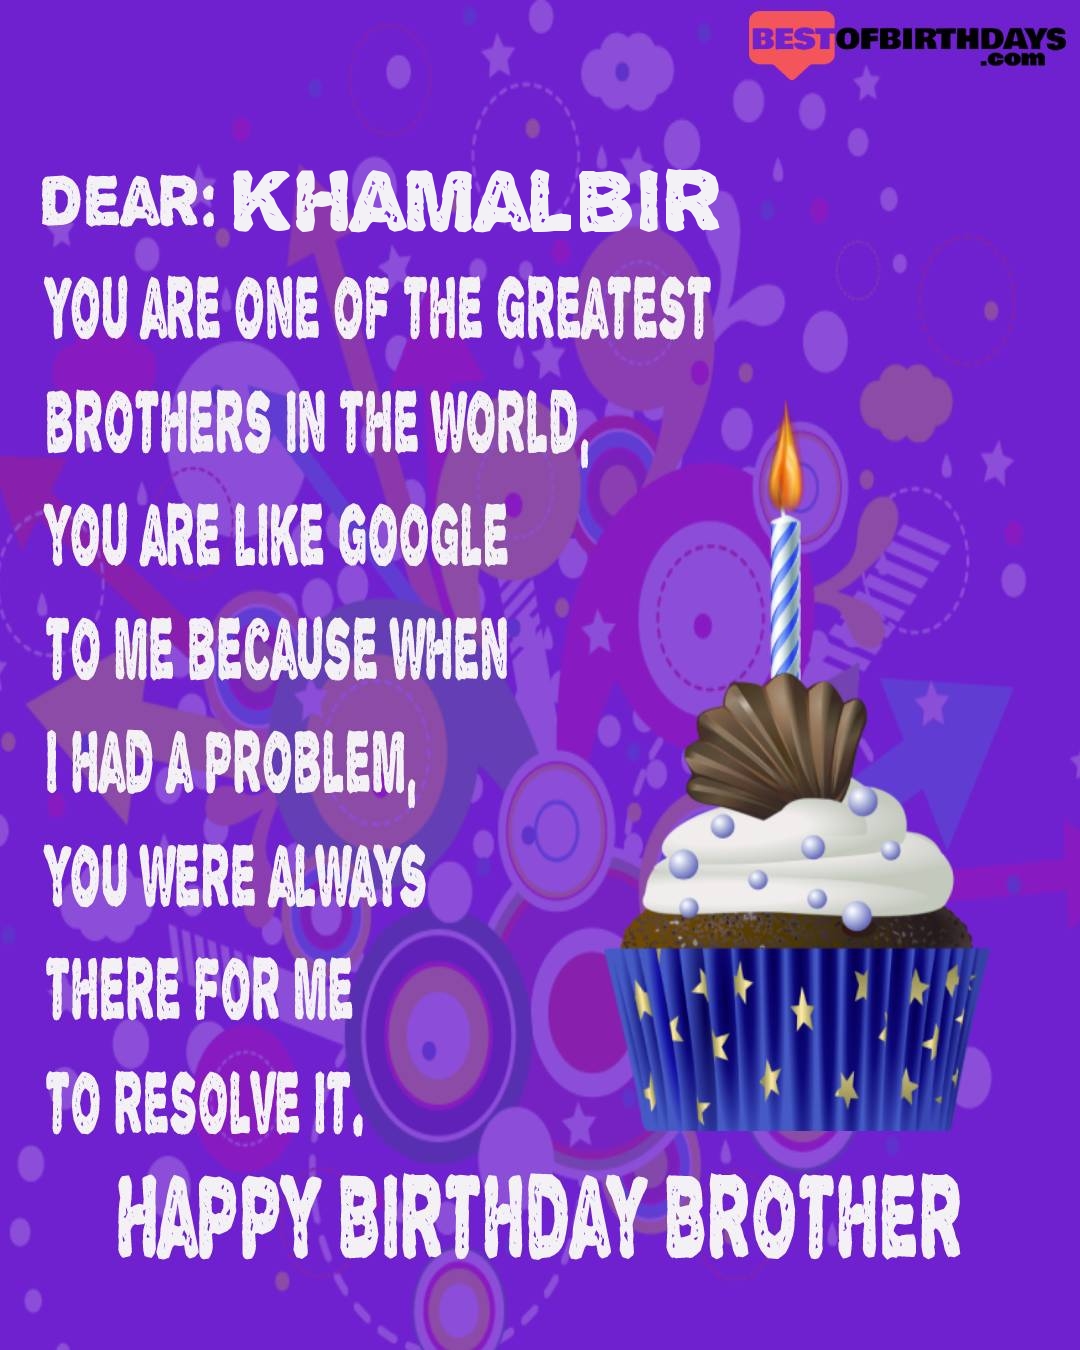 Happy birthday khamalbir bhai brother bro